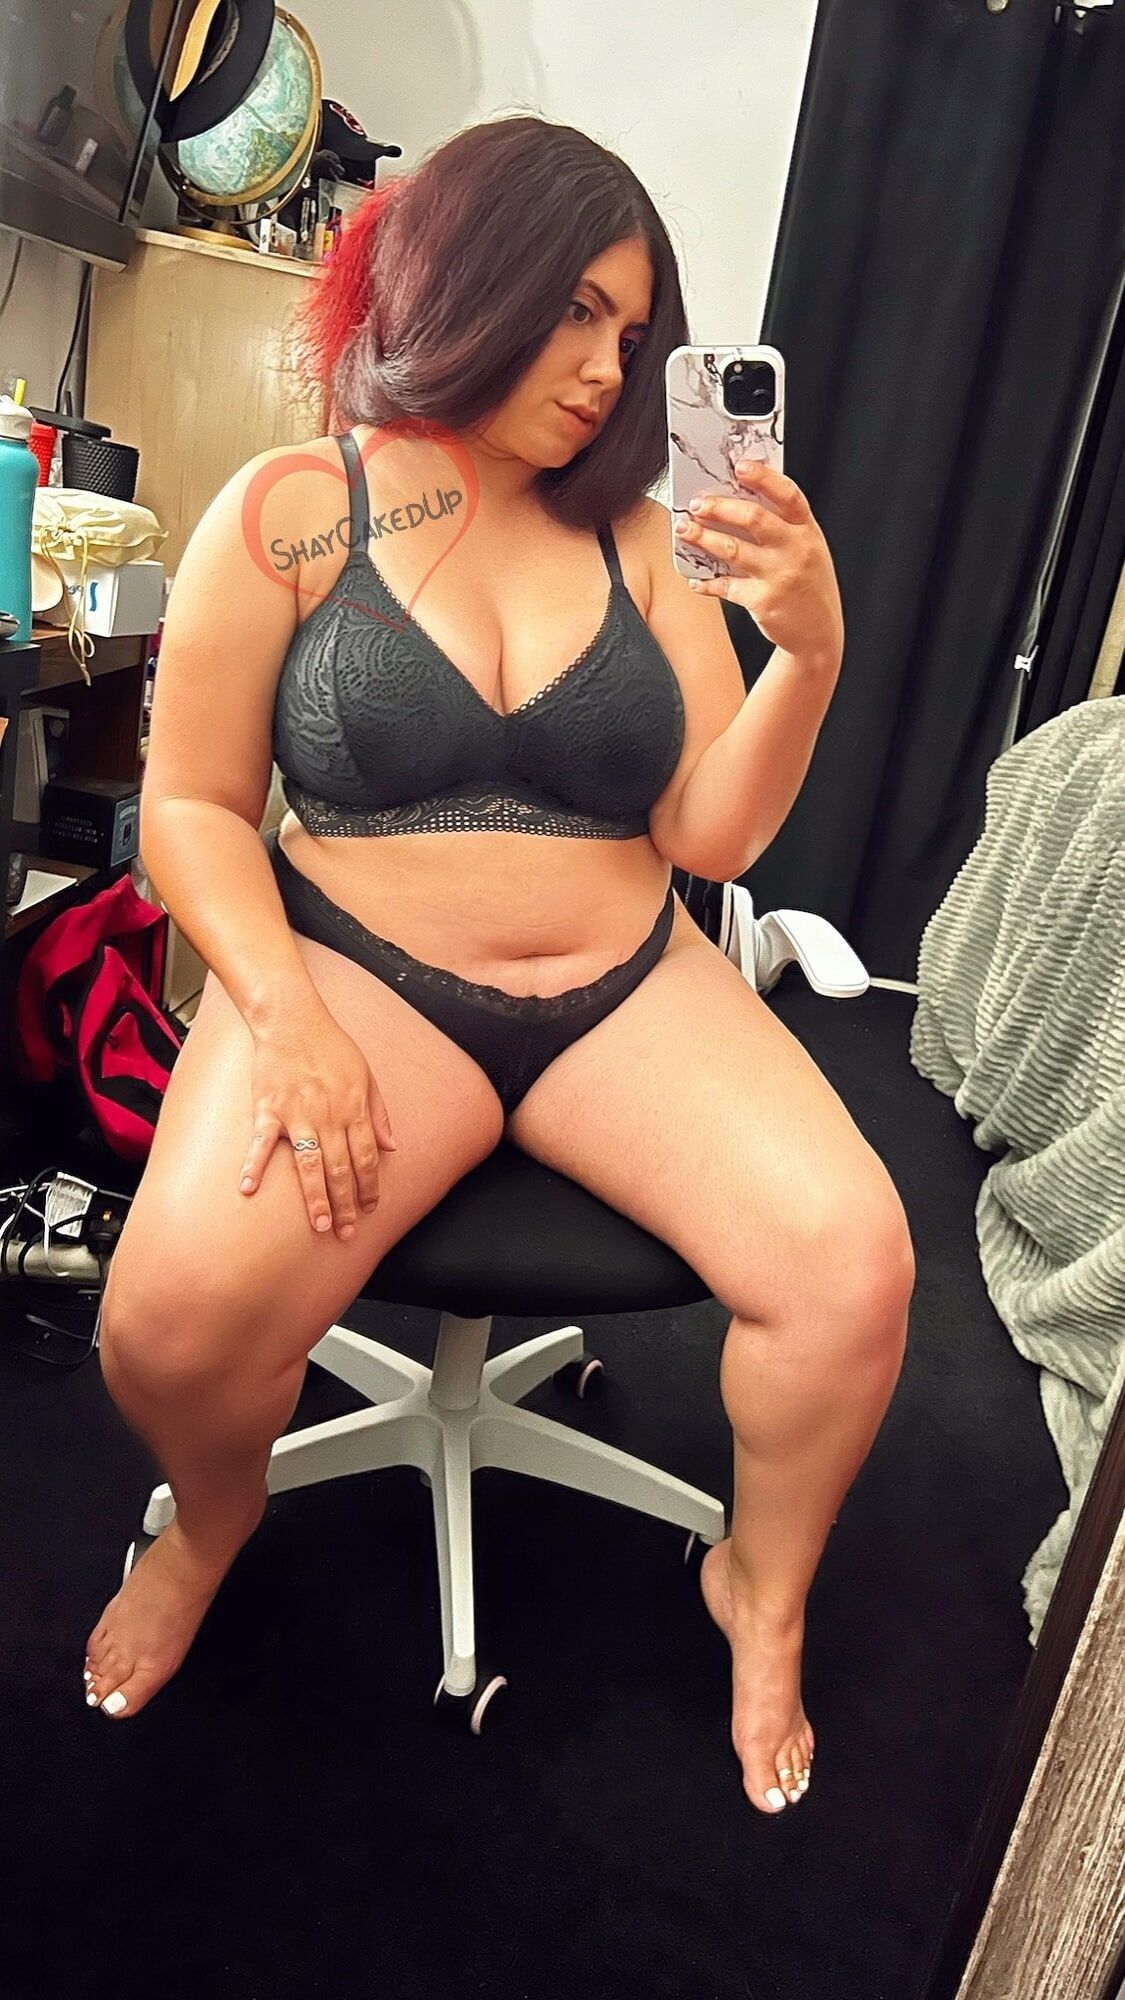 Clothed & nude mirror shot